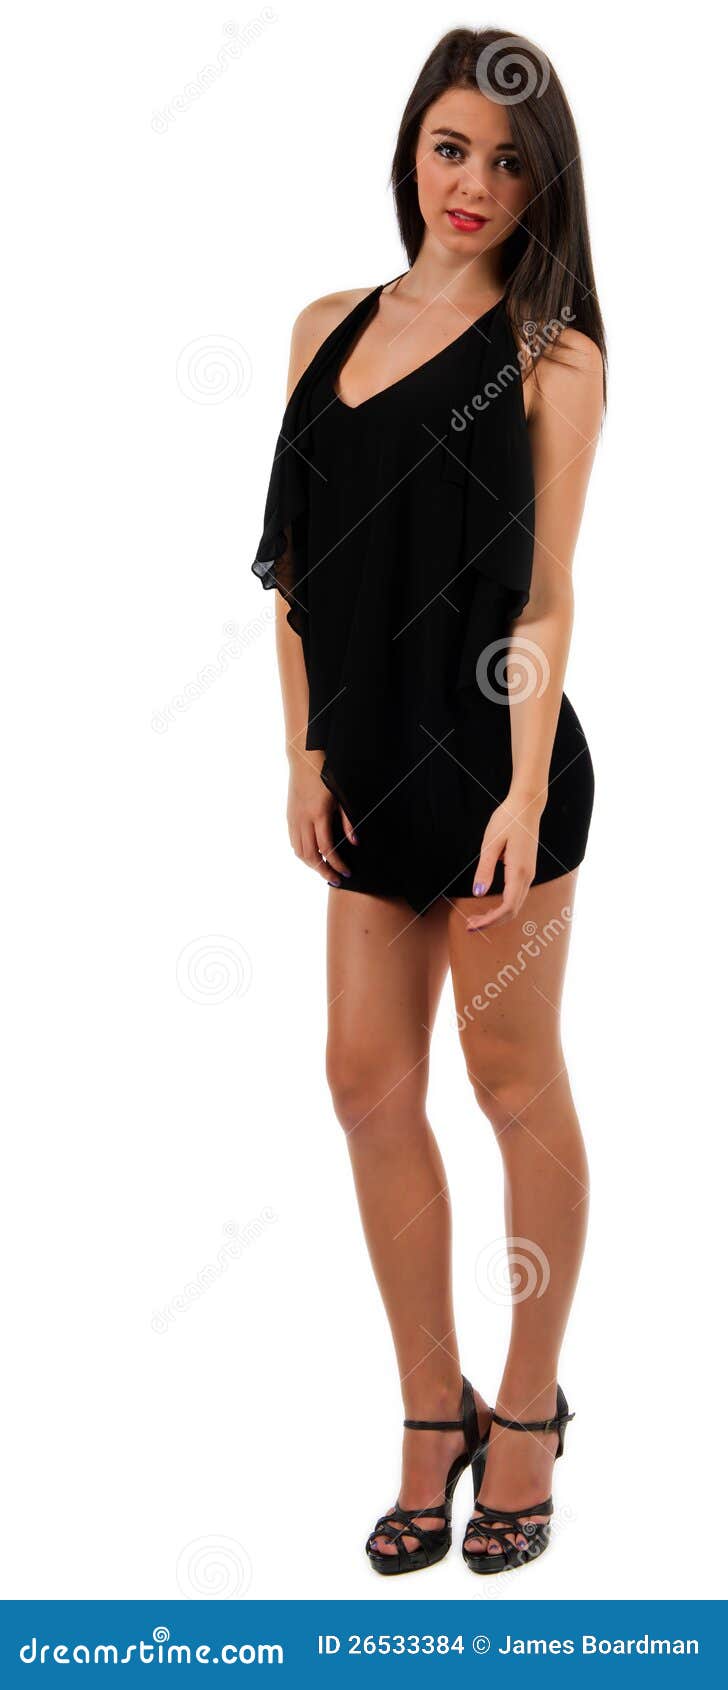 Short Black Dress With High Heels 2024